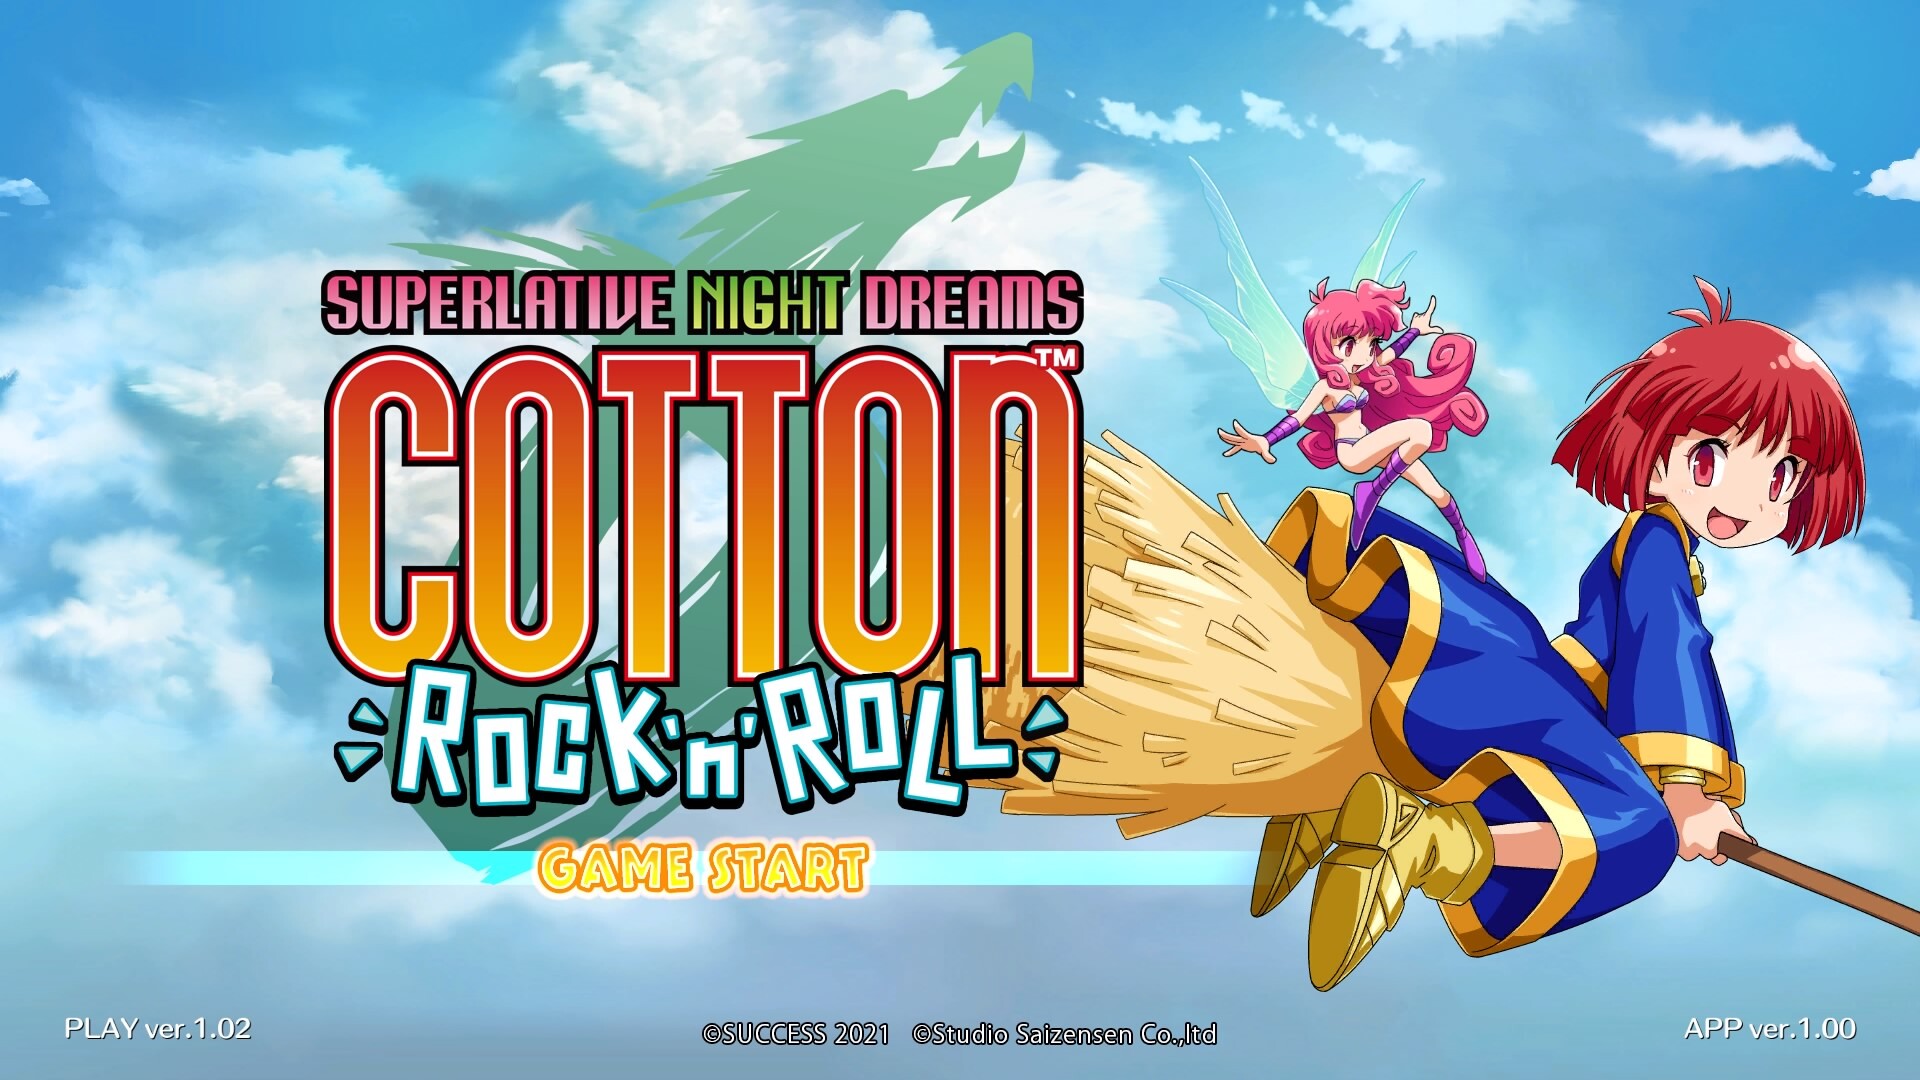 COTTOn Rock'n'Roll : SUPERLATIVE NIGHT DREAMS Steam CD Key, 16.94$